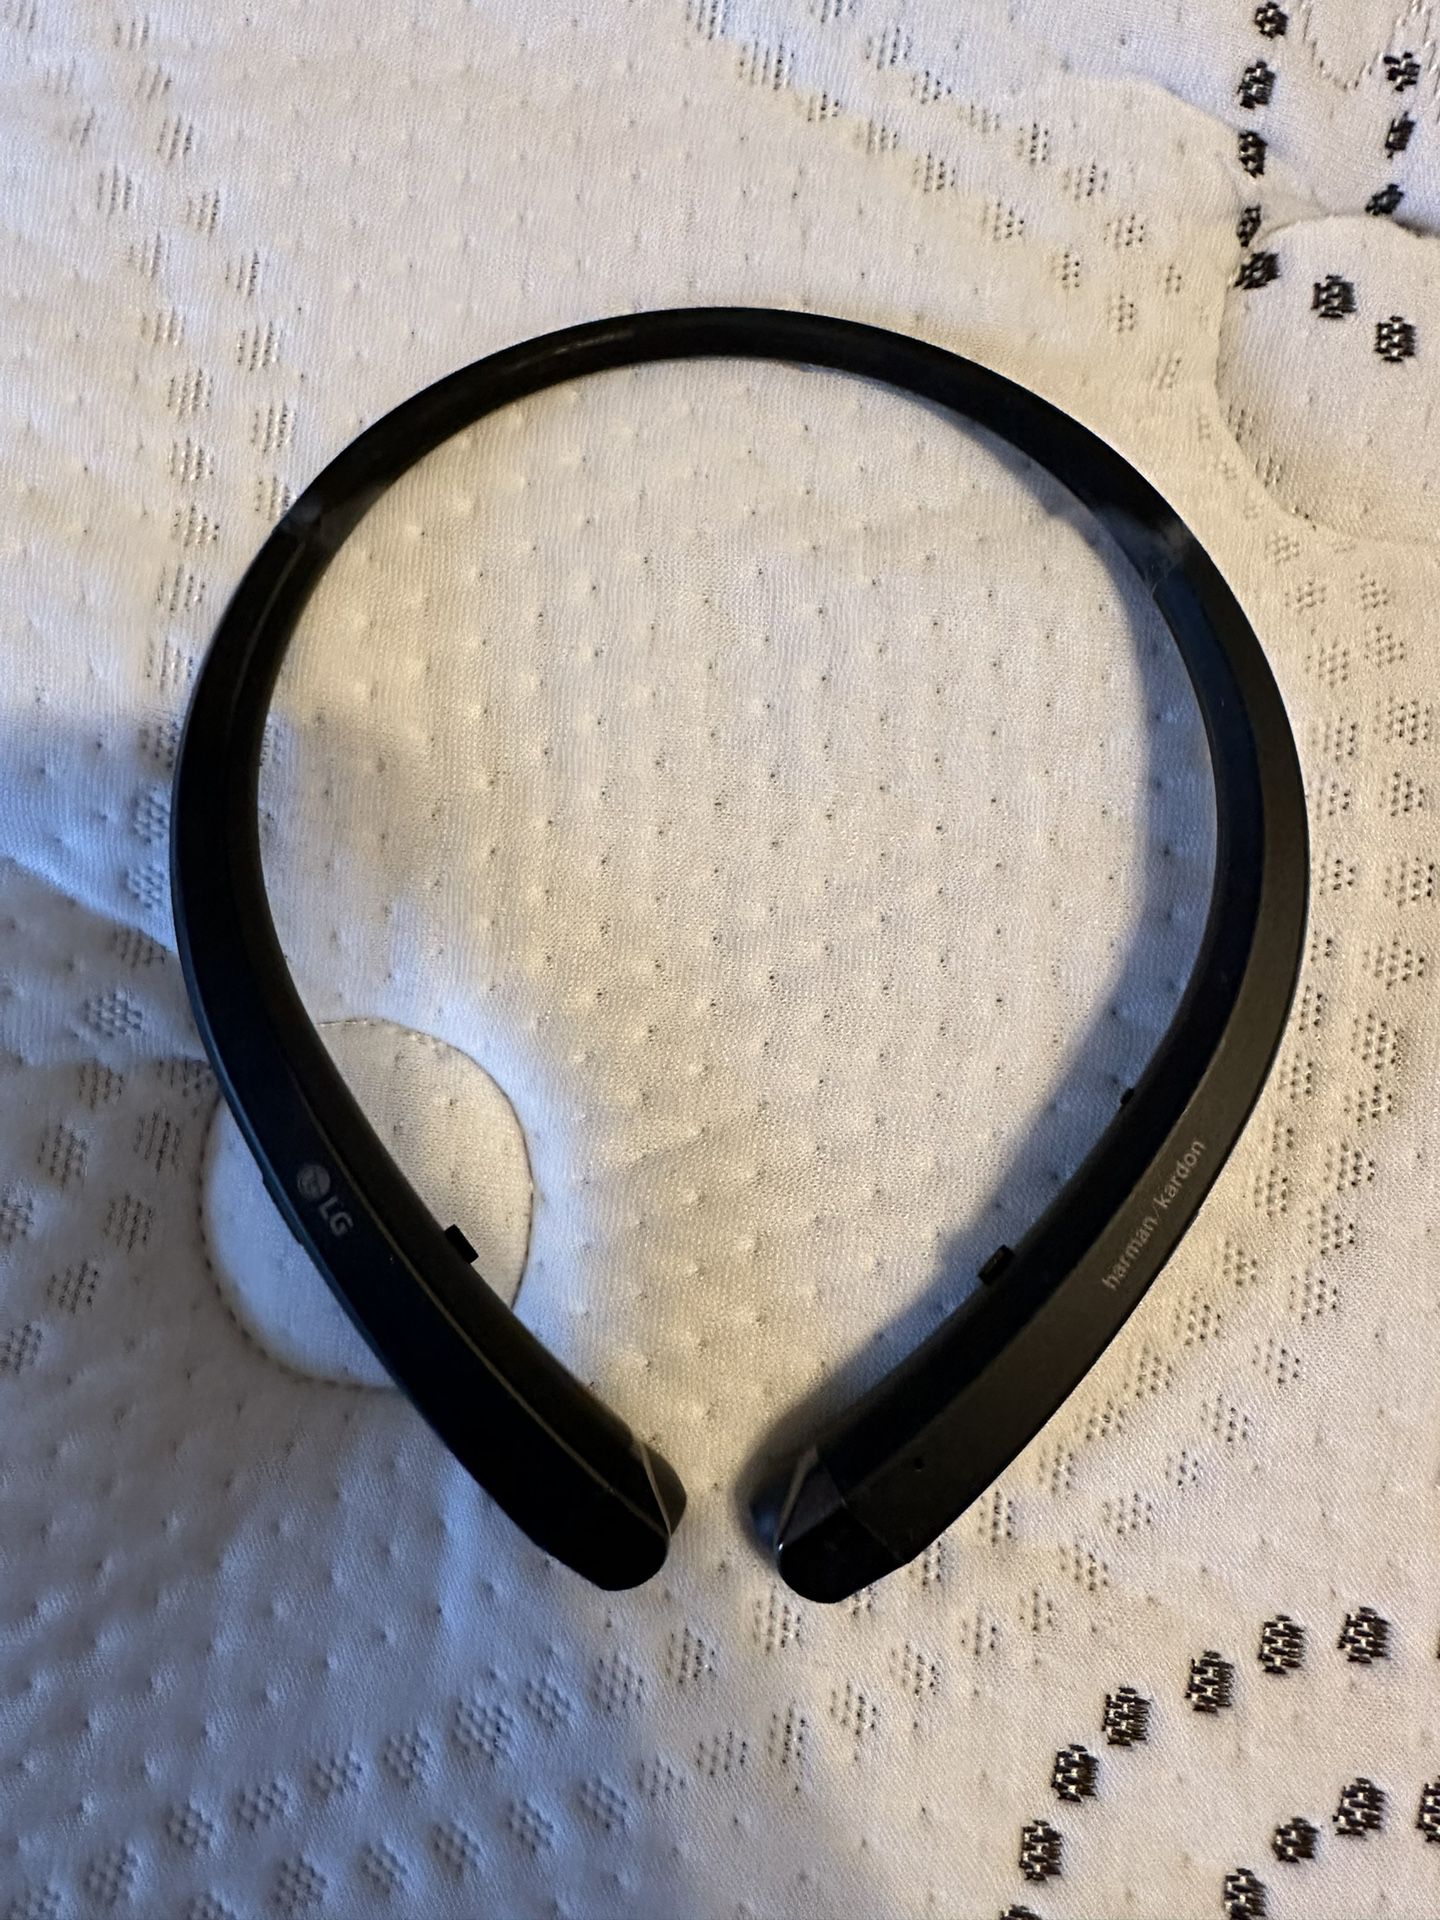 LG HBS-910 Bluetooth Headset